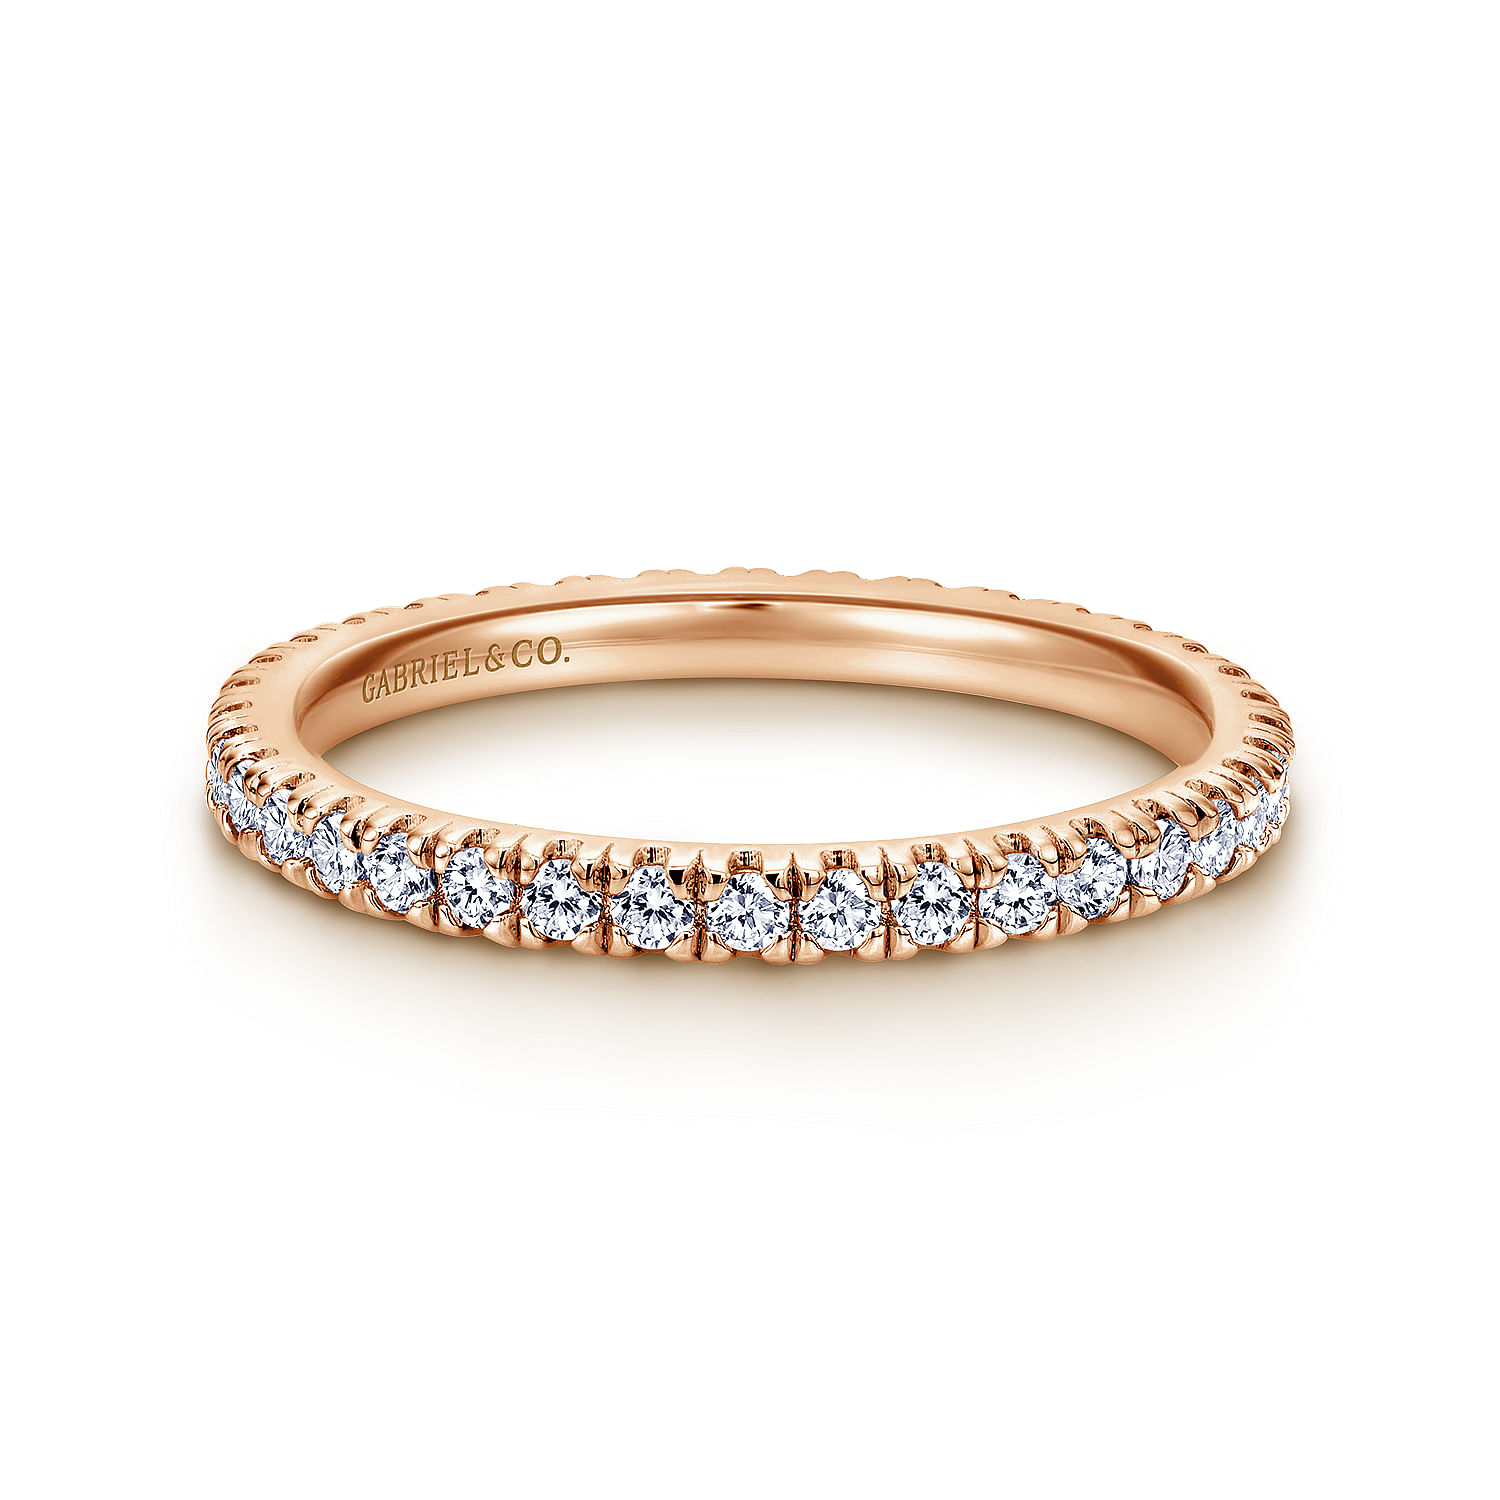 Avignon - French Pave  Eternity Diamond Ring in 14K Rose Gold